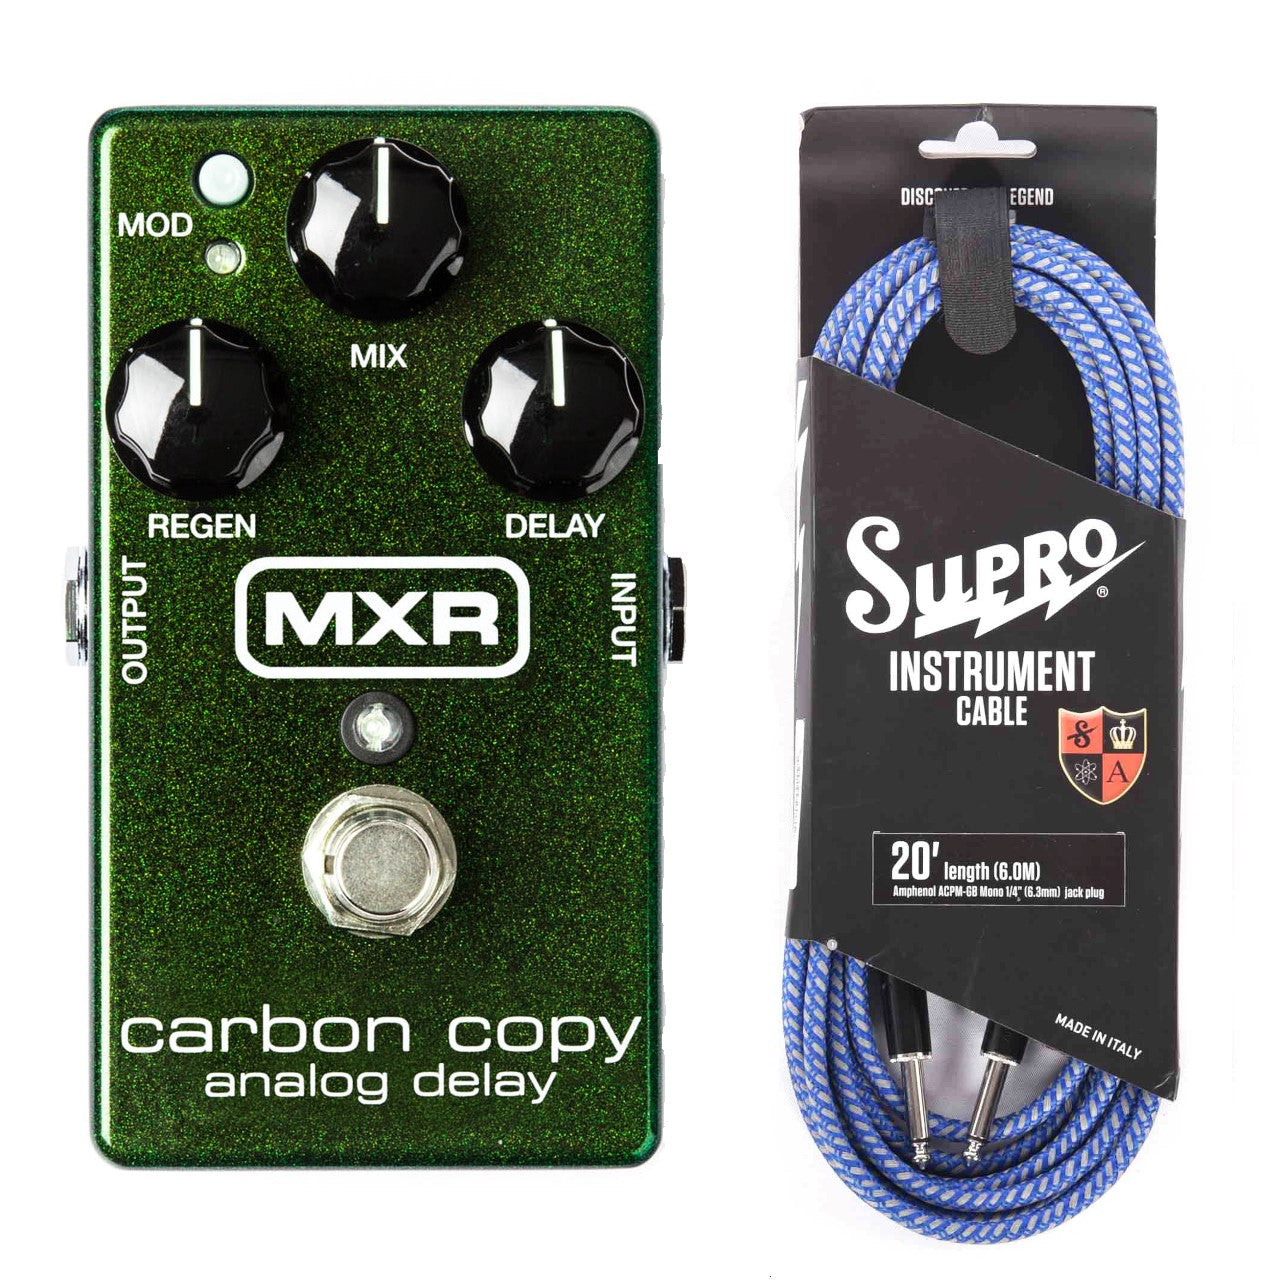 Dunlop MXR M169 Carbon Copy Analog Delay Guitar Effect Pedal + FREE Supro 20' Cable